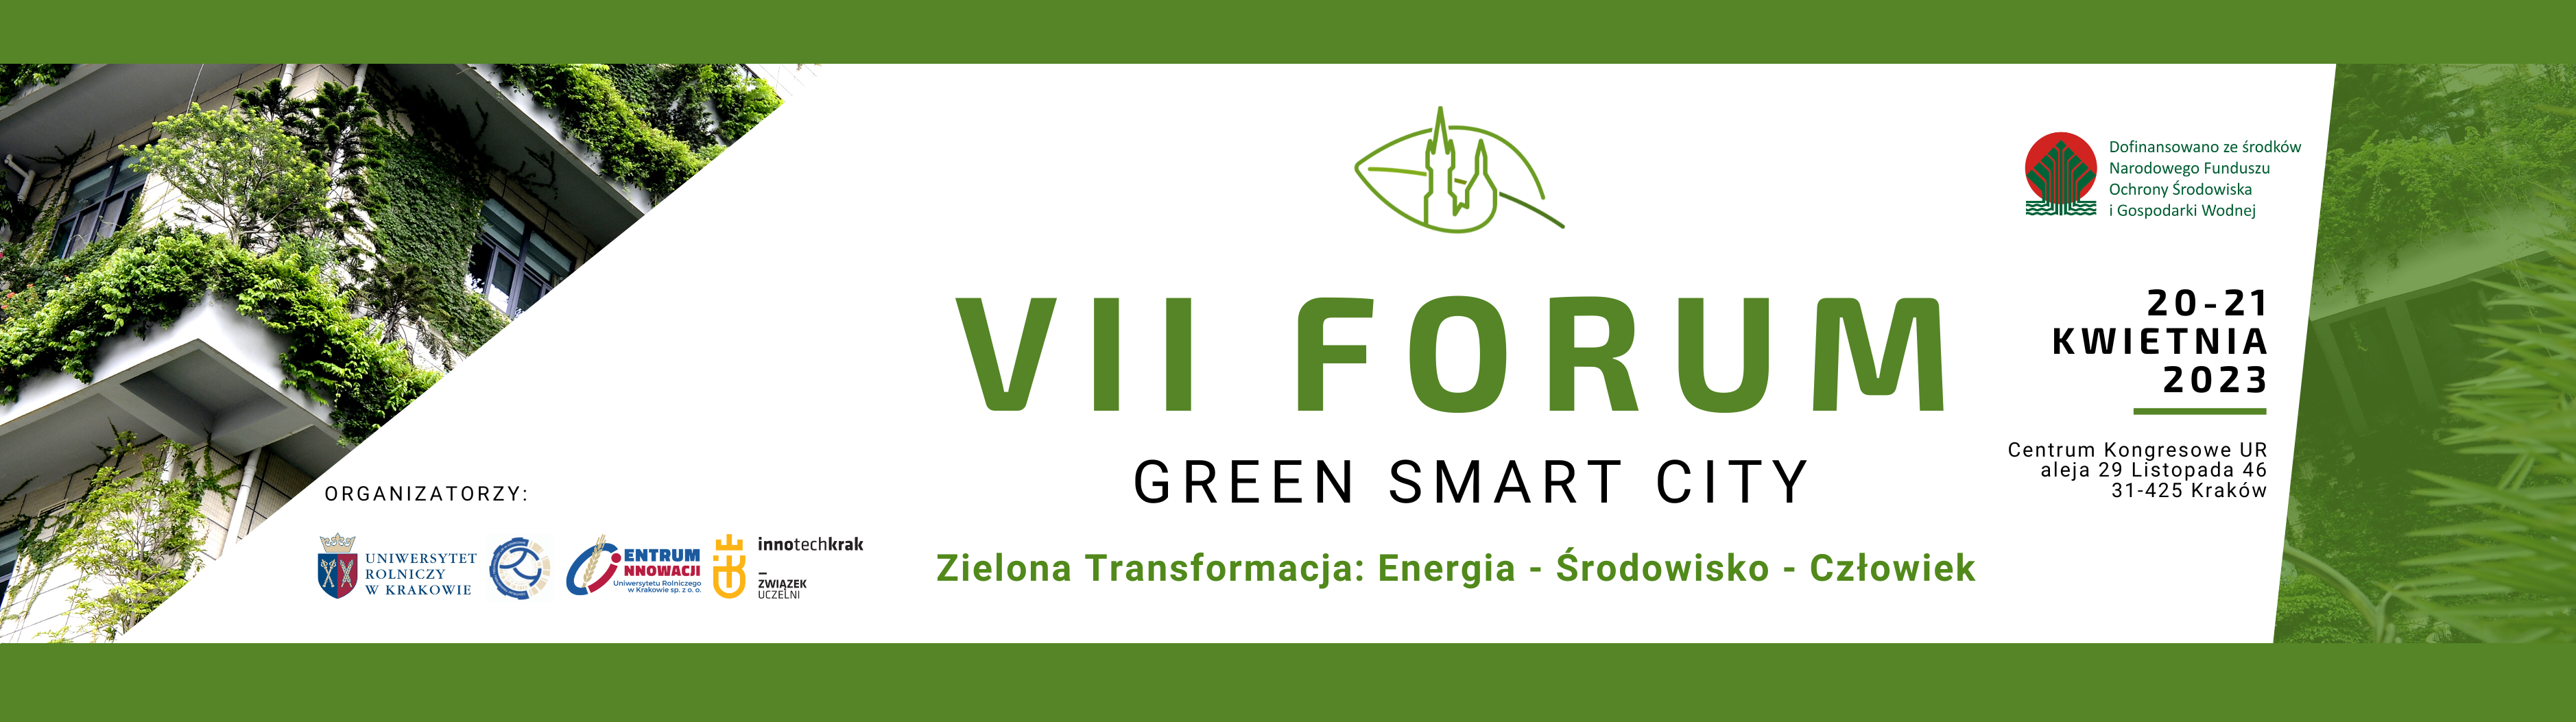 VII FORUM GREEN SMART CITY